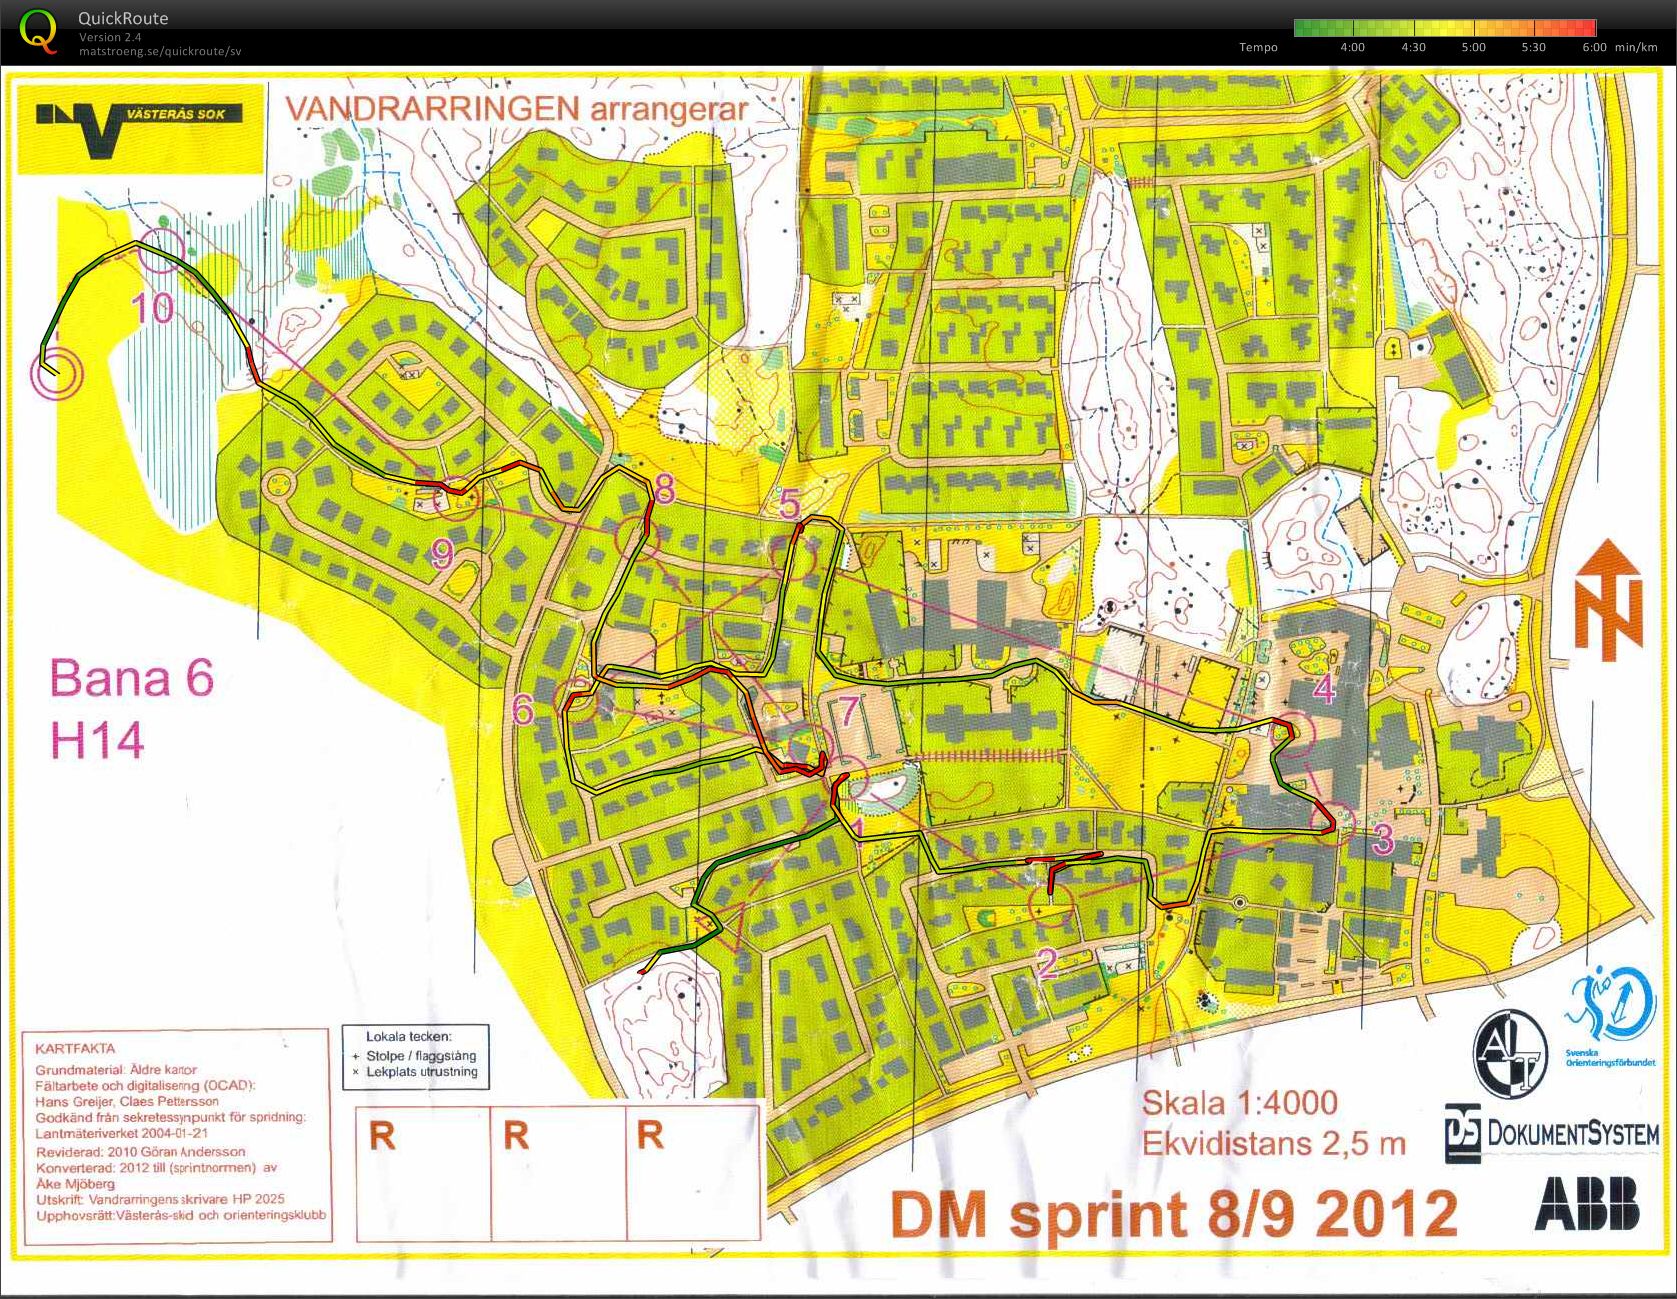 dm sprint 2012 (08.09.2012)